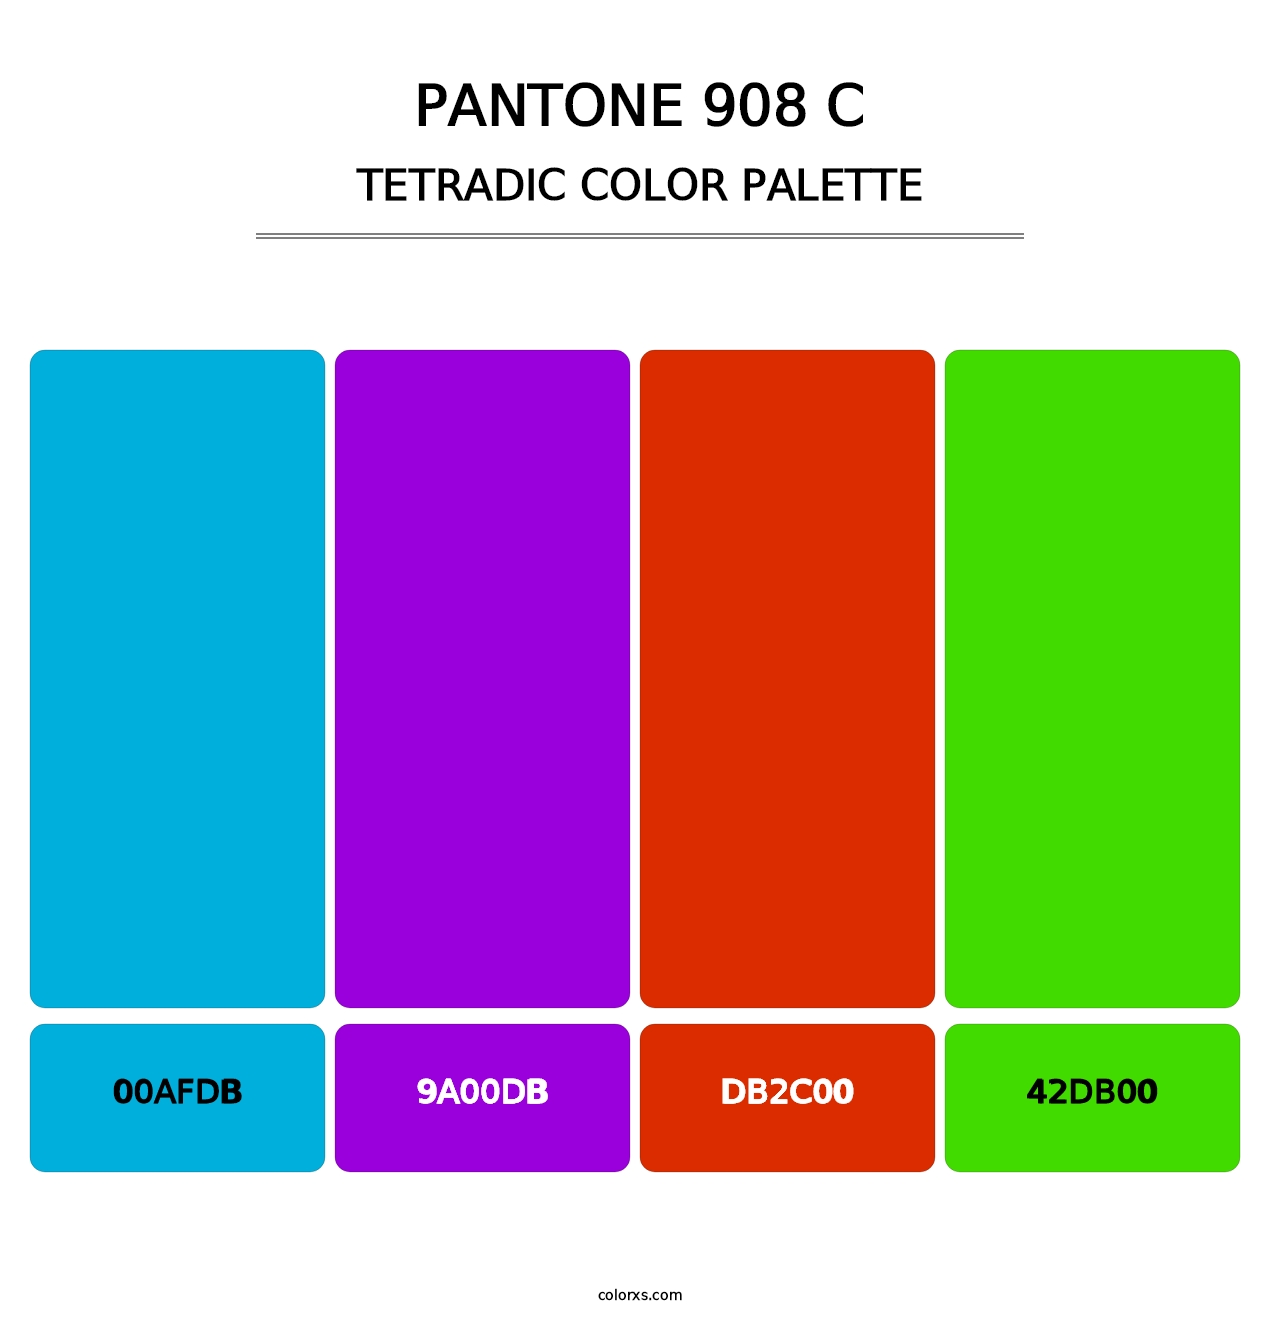 PANTONE 908 C - Tetradic Color Palette